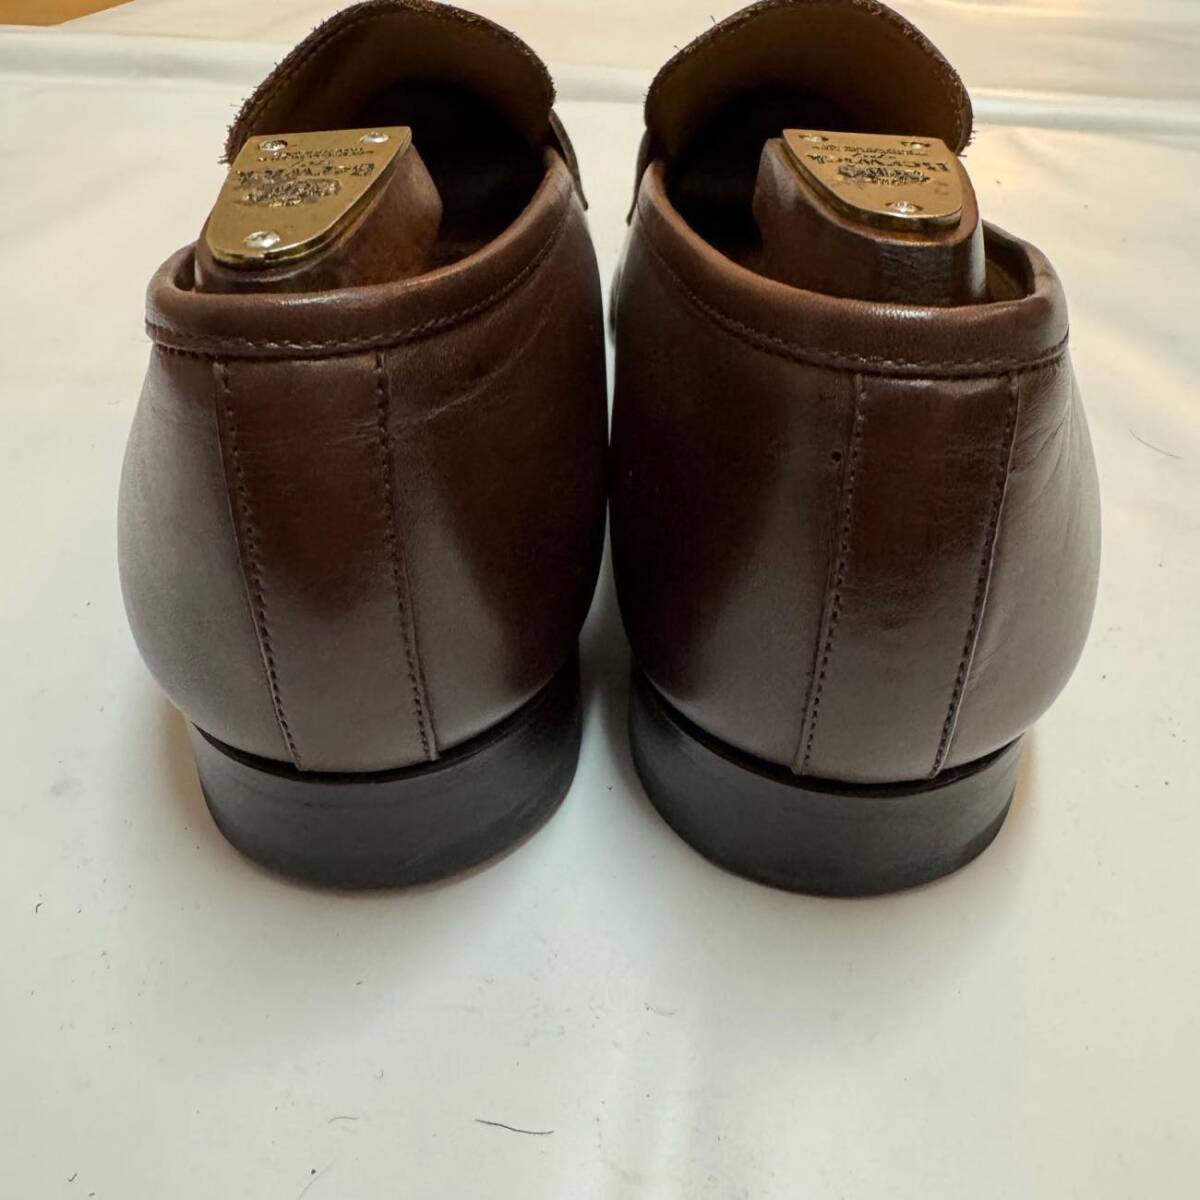 26cm REGAL リーガル コインローファー レザーシューズ 革靴 ビジネスシューズ メンズ ブラウン レザーソール 日本製 男性用 629 茶靴_画像7